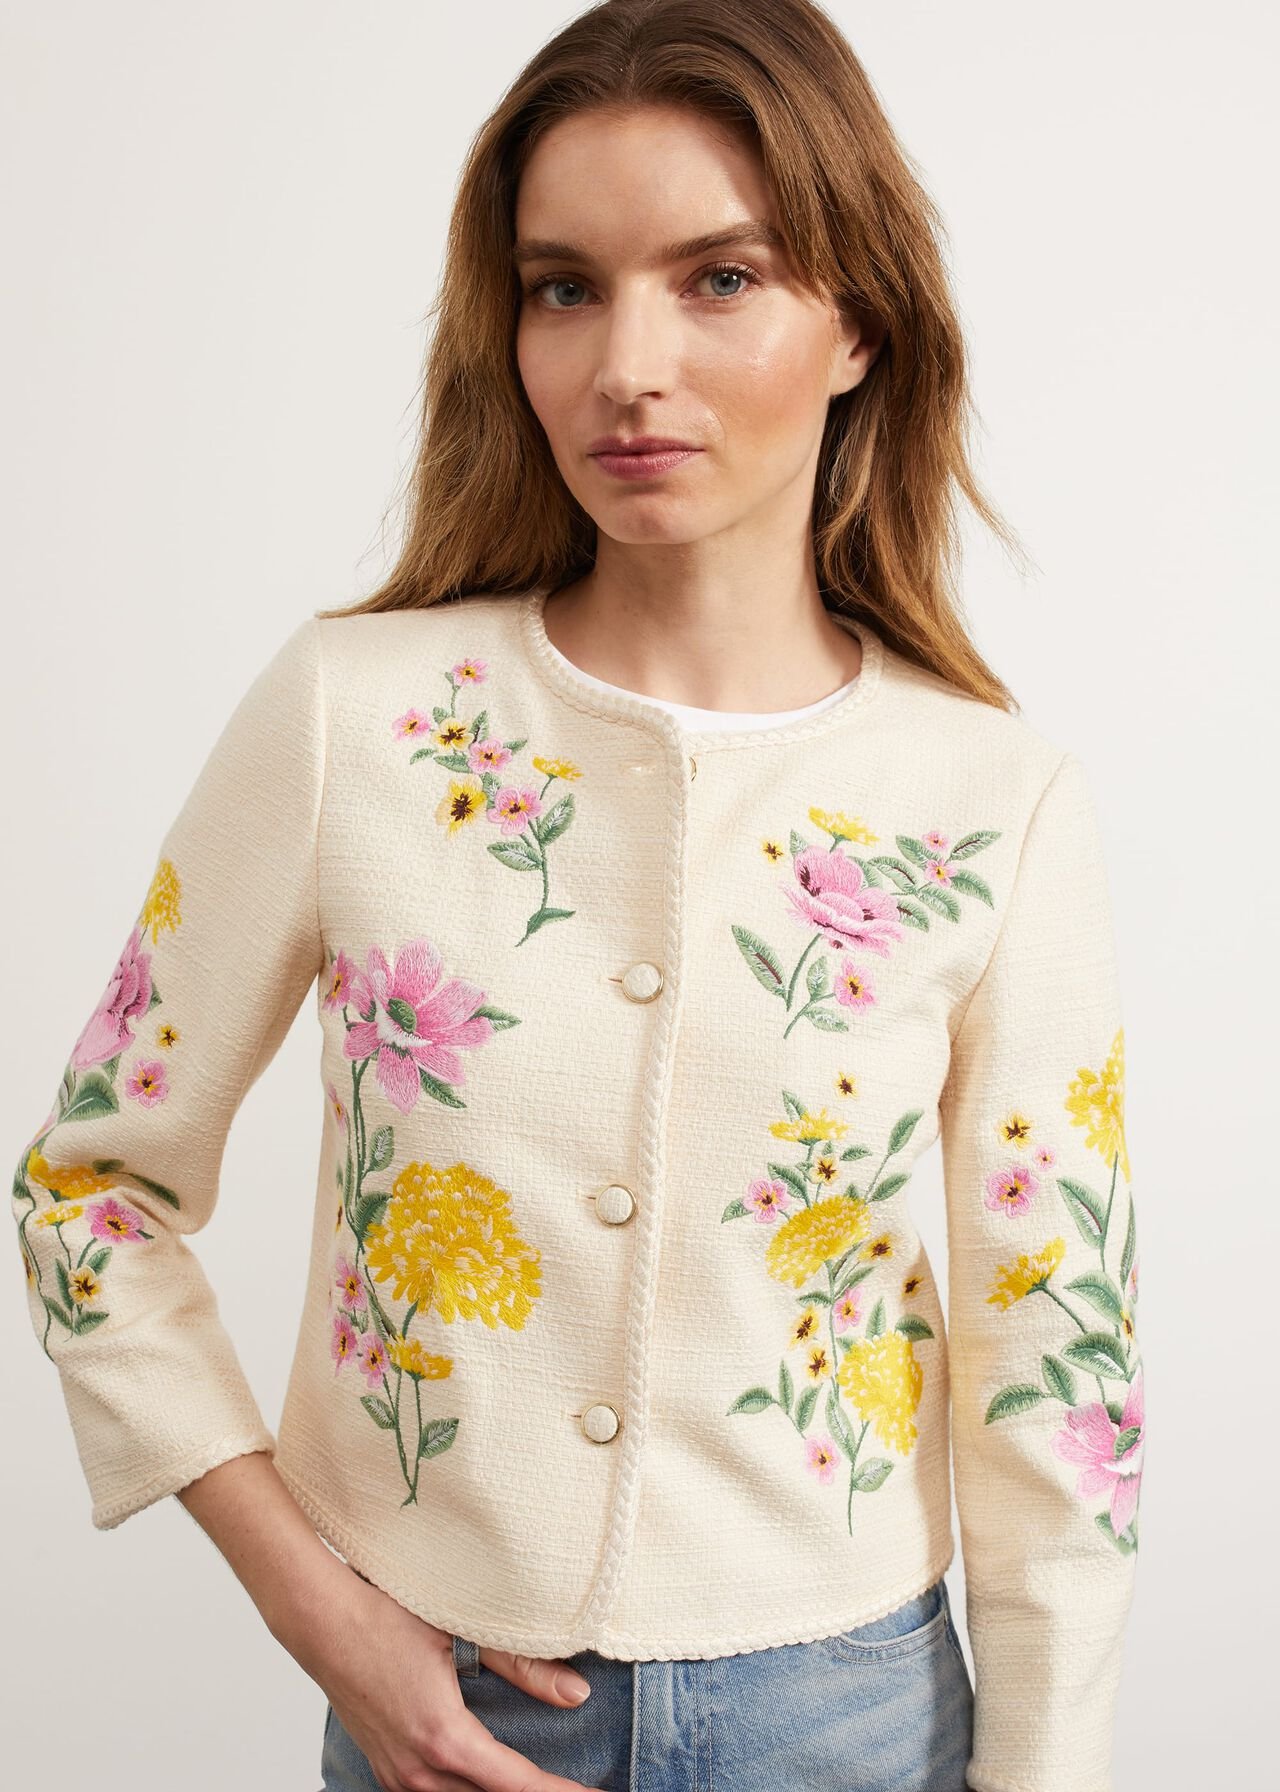 Hinton Floral Embroidered Jacket, Cream Multi, hi-res